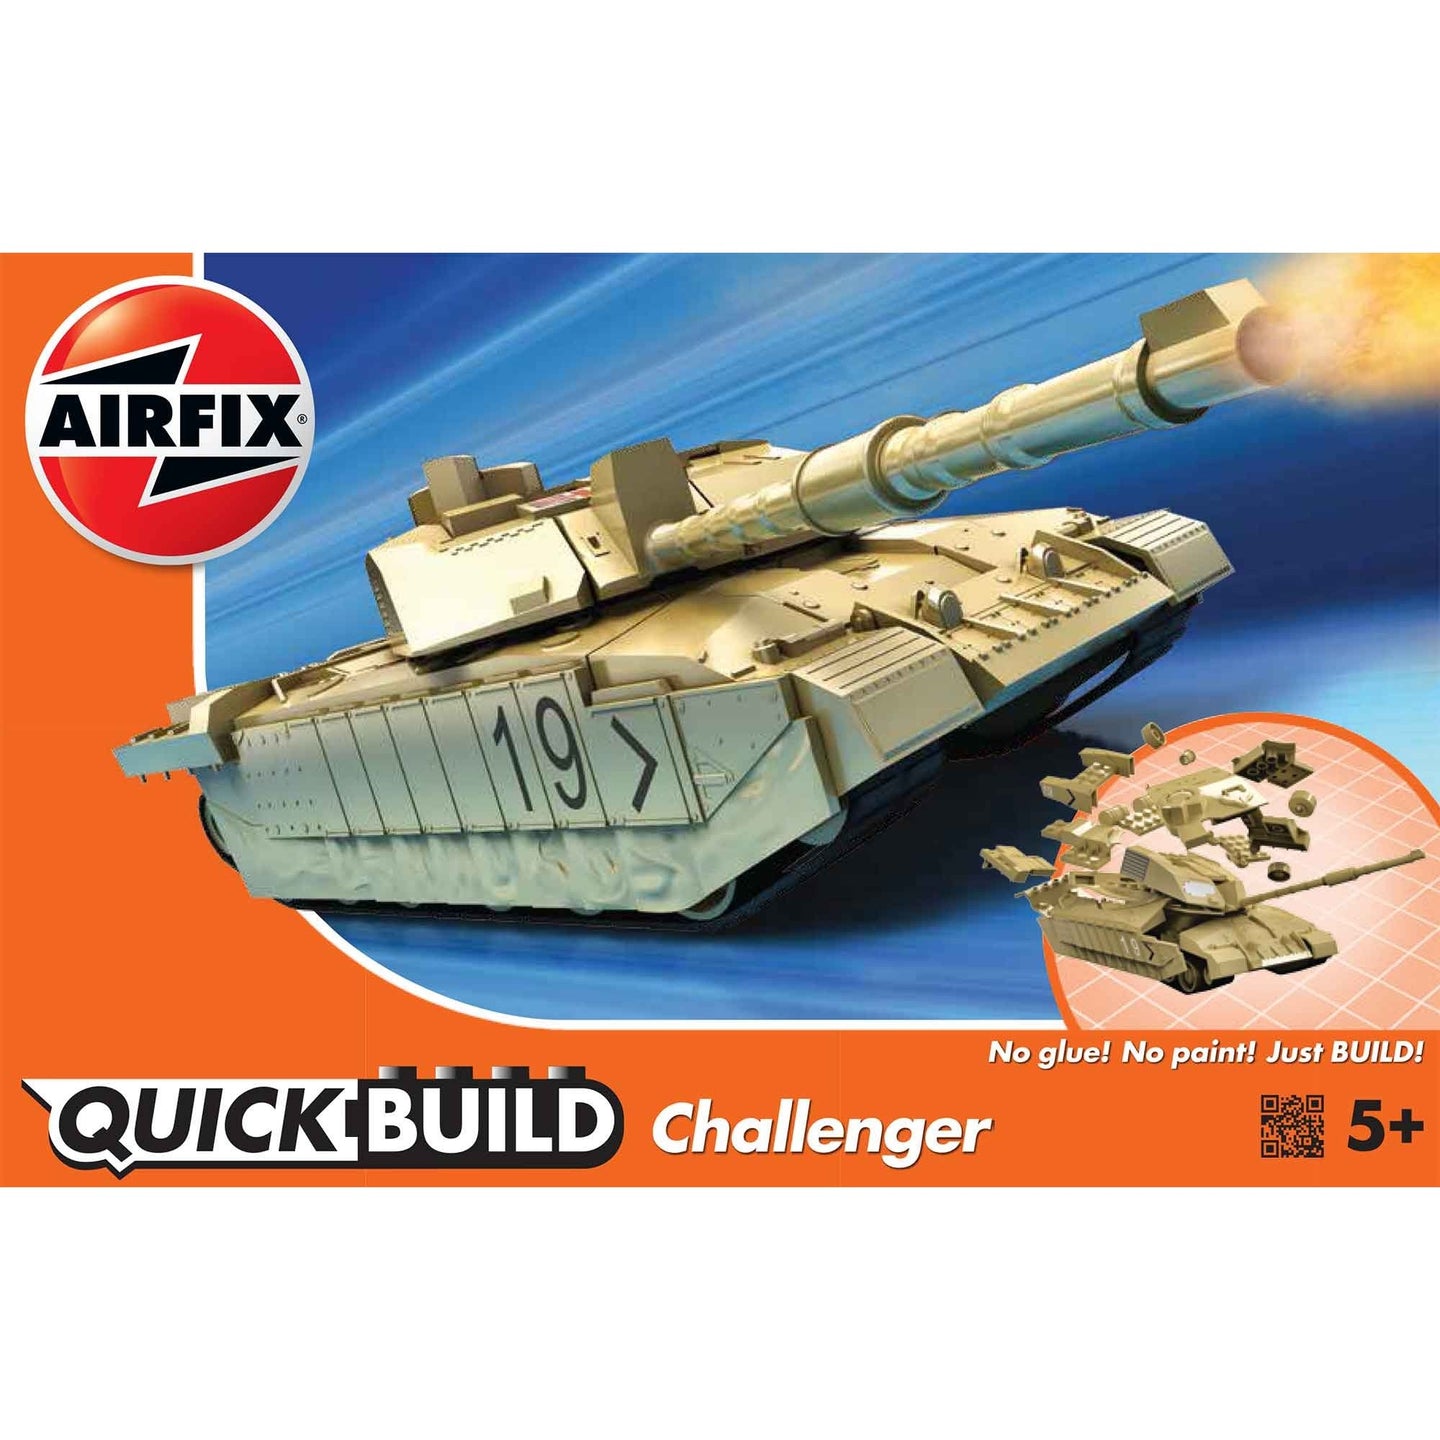 Airfix Quickbuild Snap British Challenger Tan  J6010